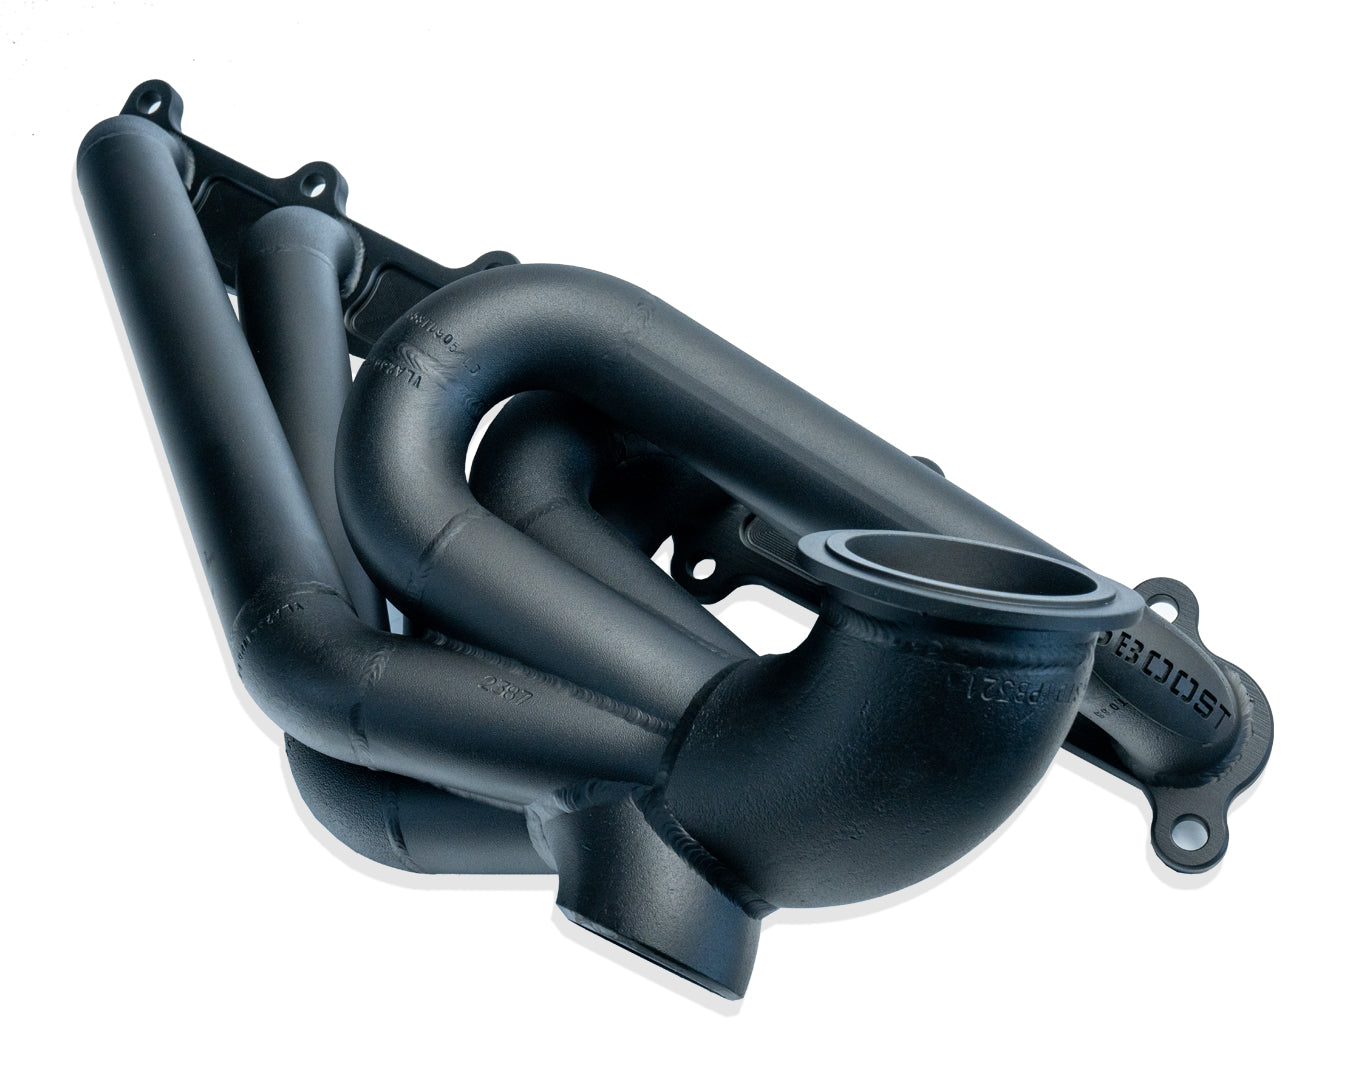 Ford Barra X Series Forward Position Promod Exhaust Manifold